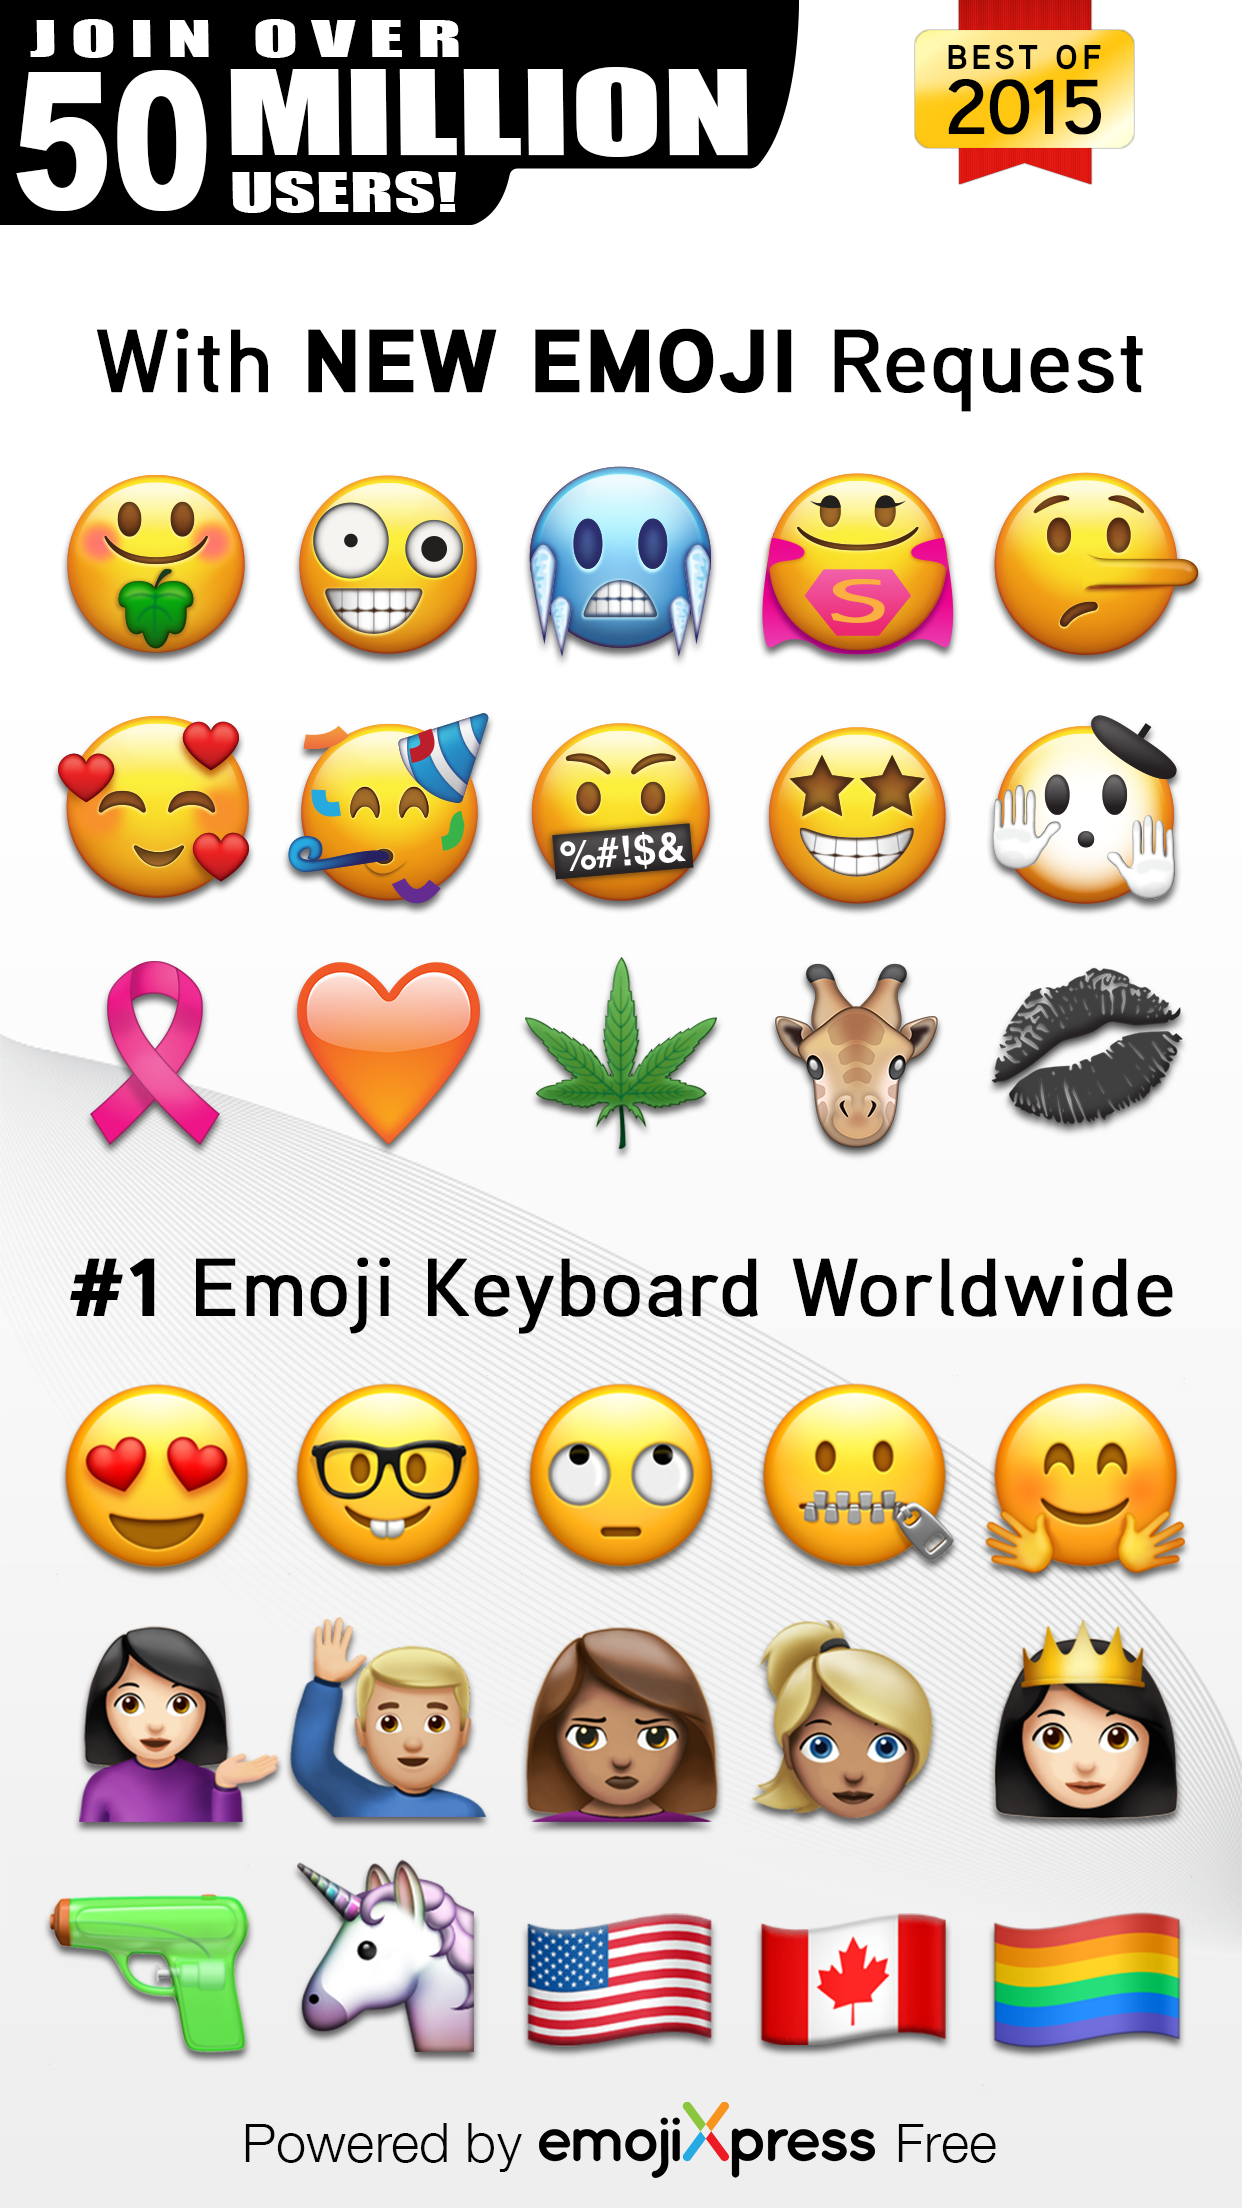 Neue Emojis